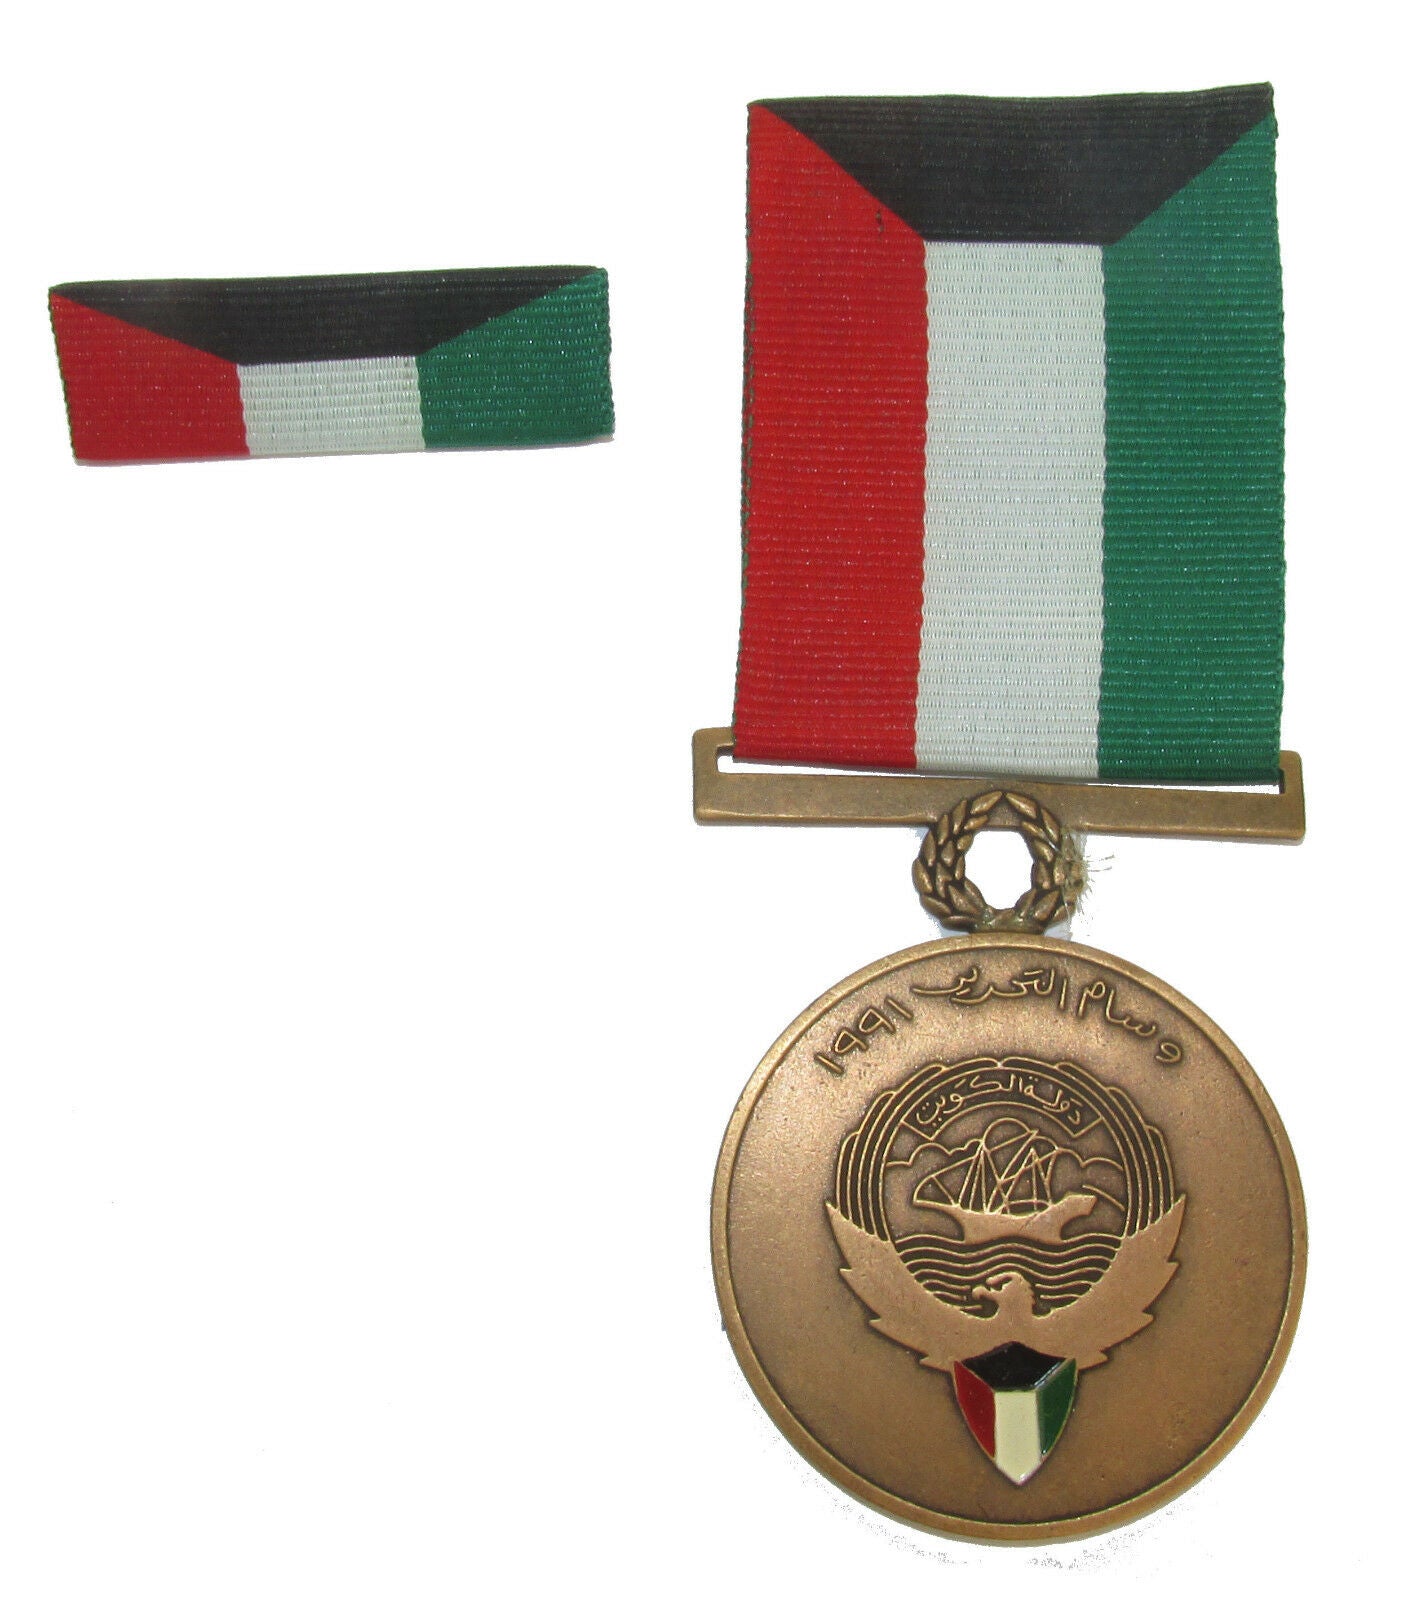 Authentic Kuwait Liberation Medal & Ribbon Set - Genuine U.S. Military Medal